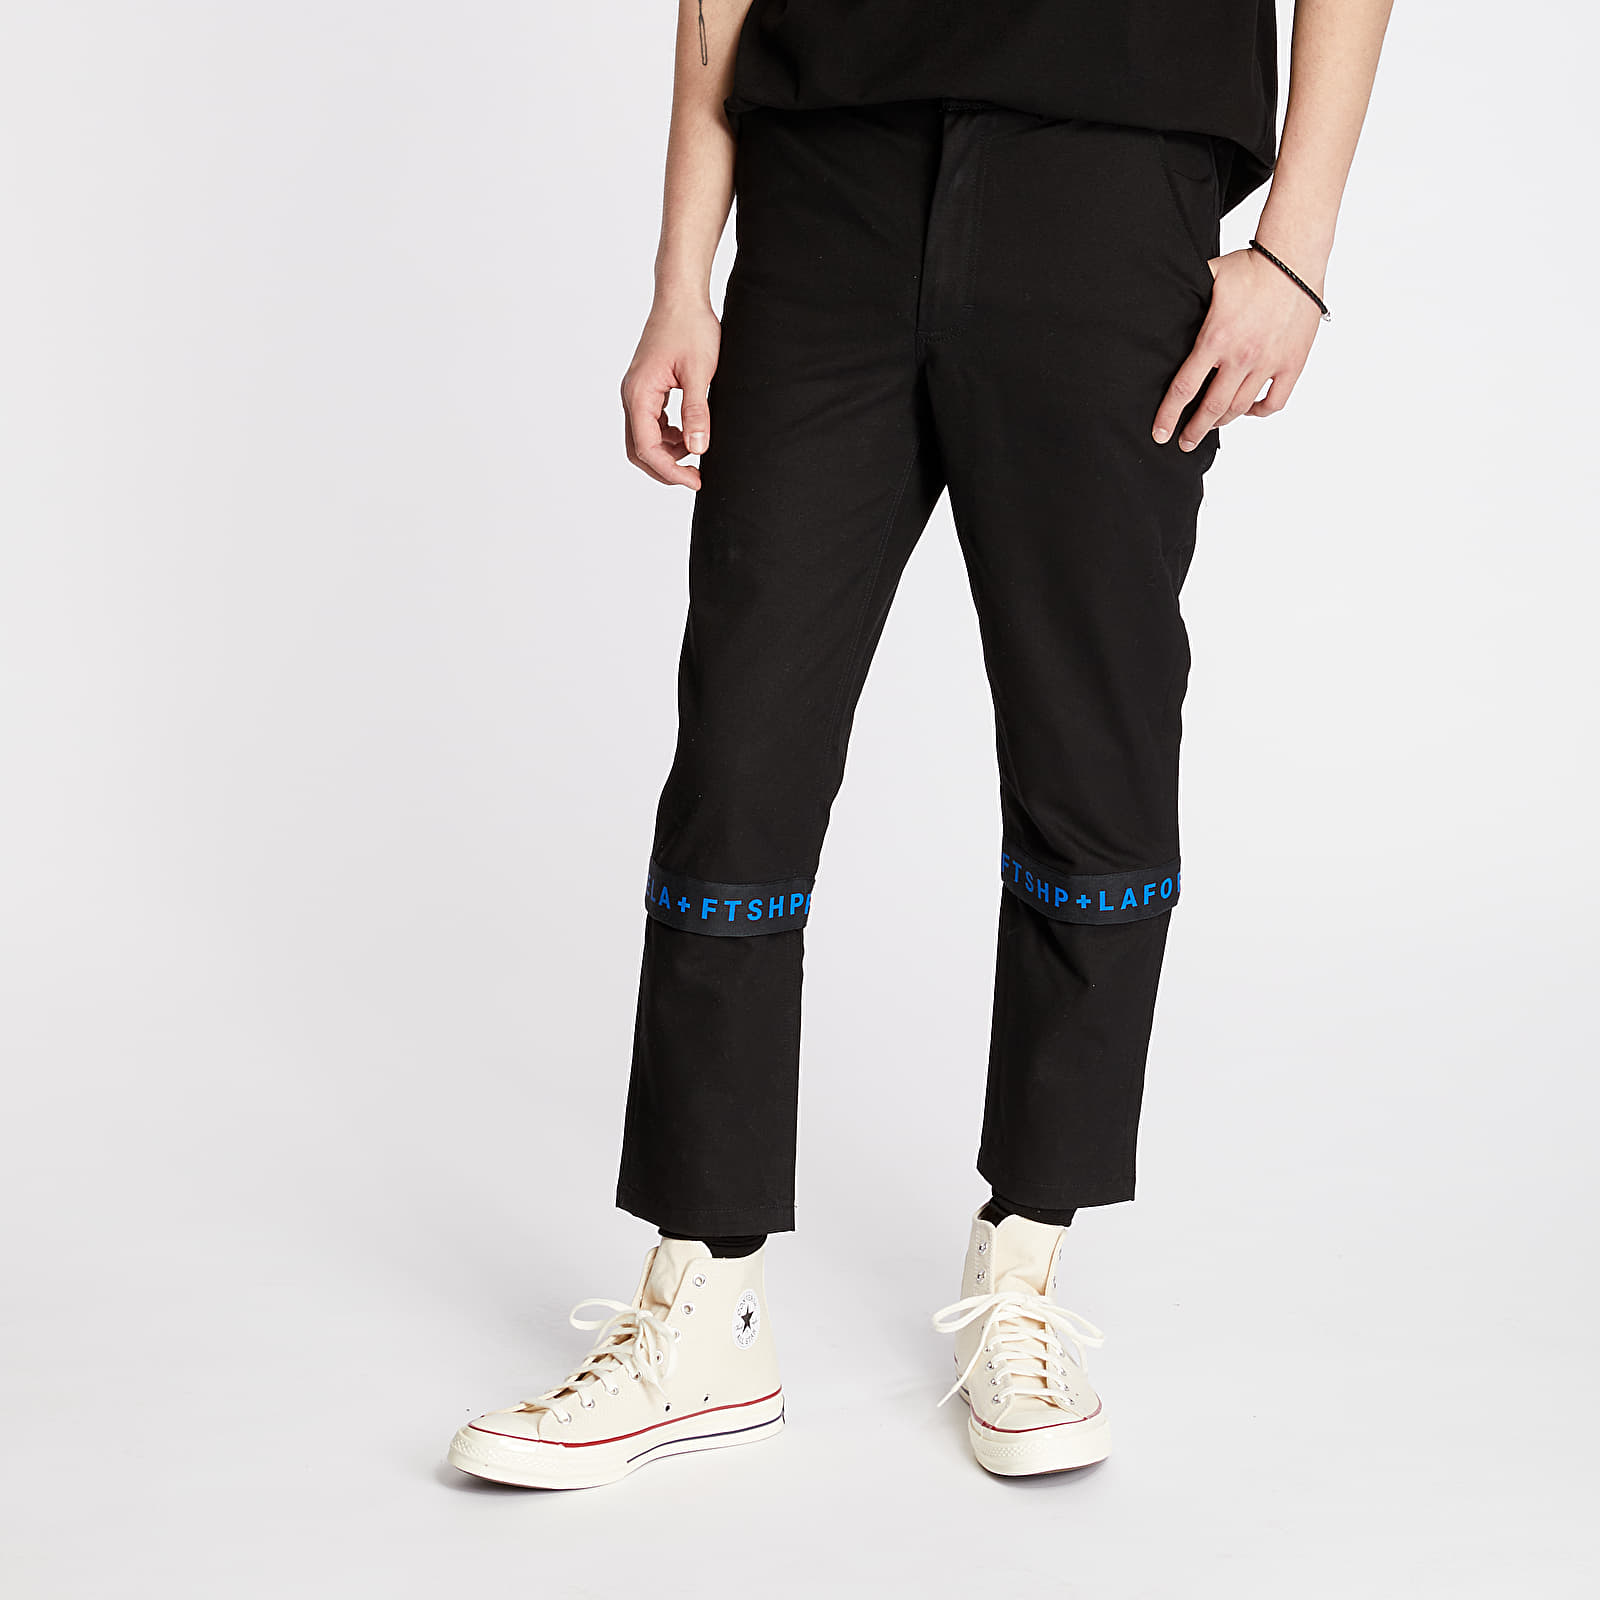 Pants and jeans FTSHP + LAFORMELA "No Season" Twill Logo Pants Black